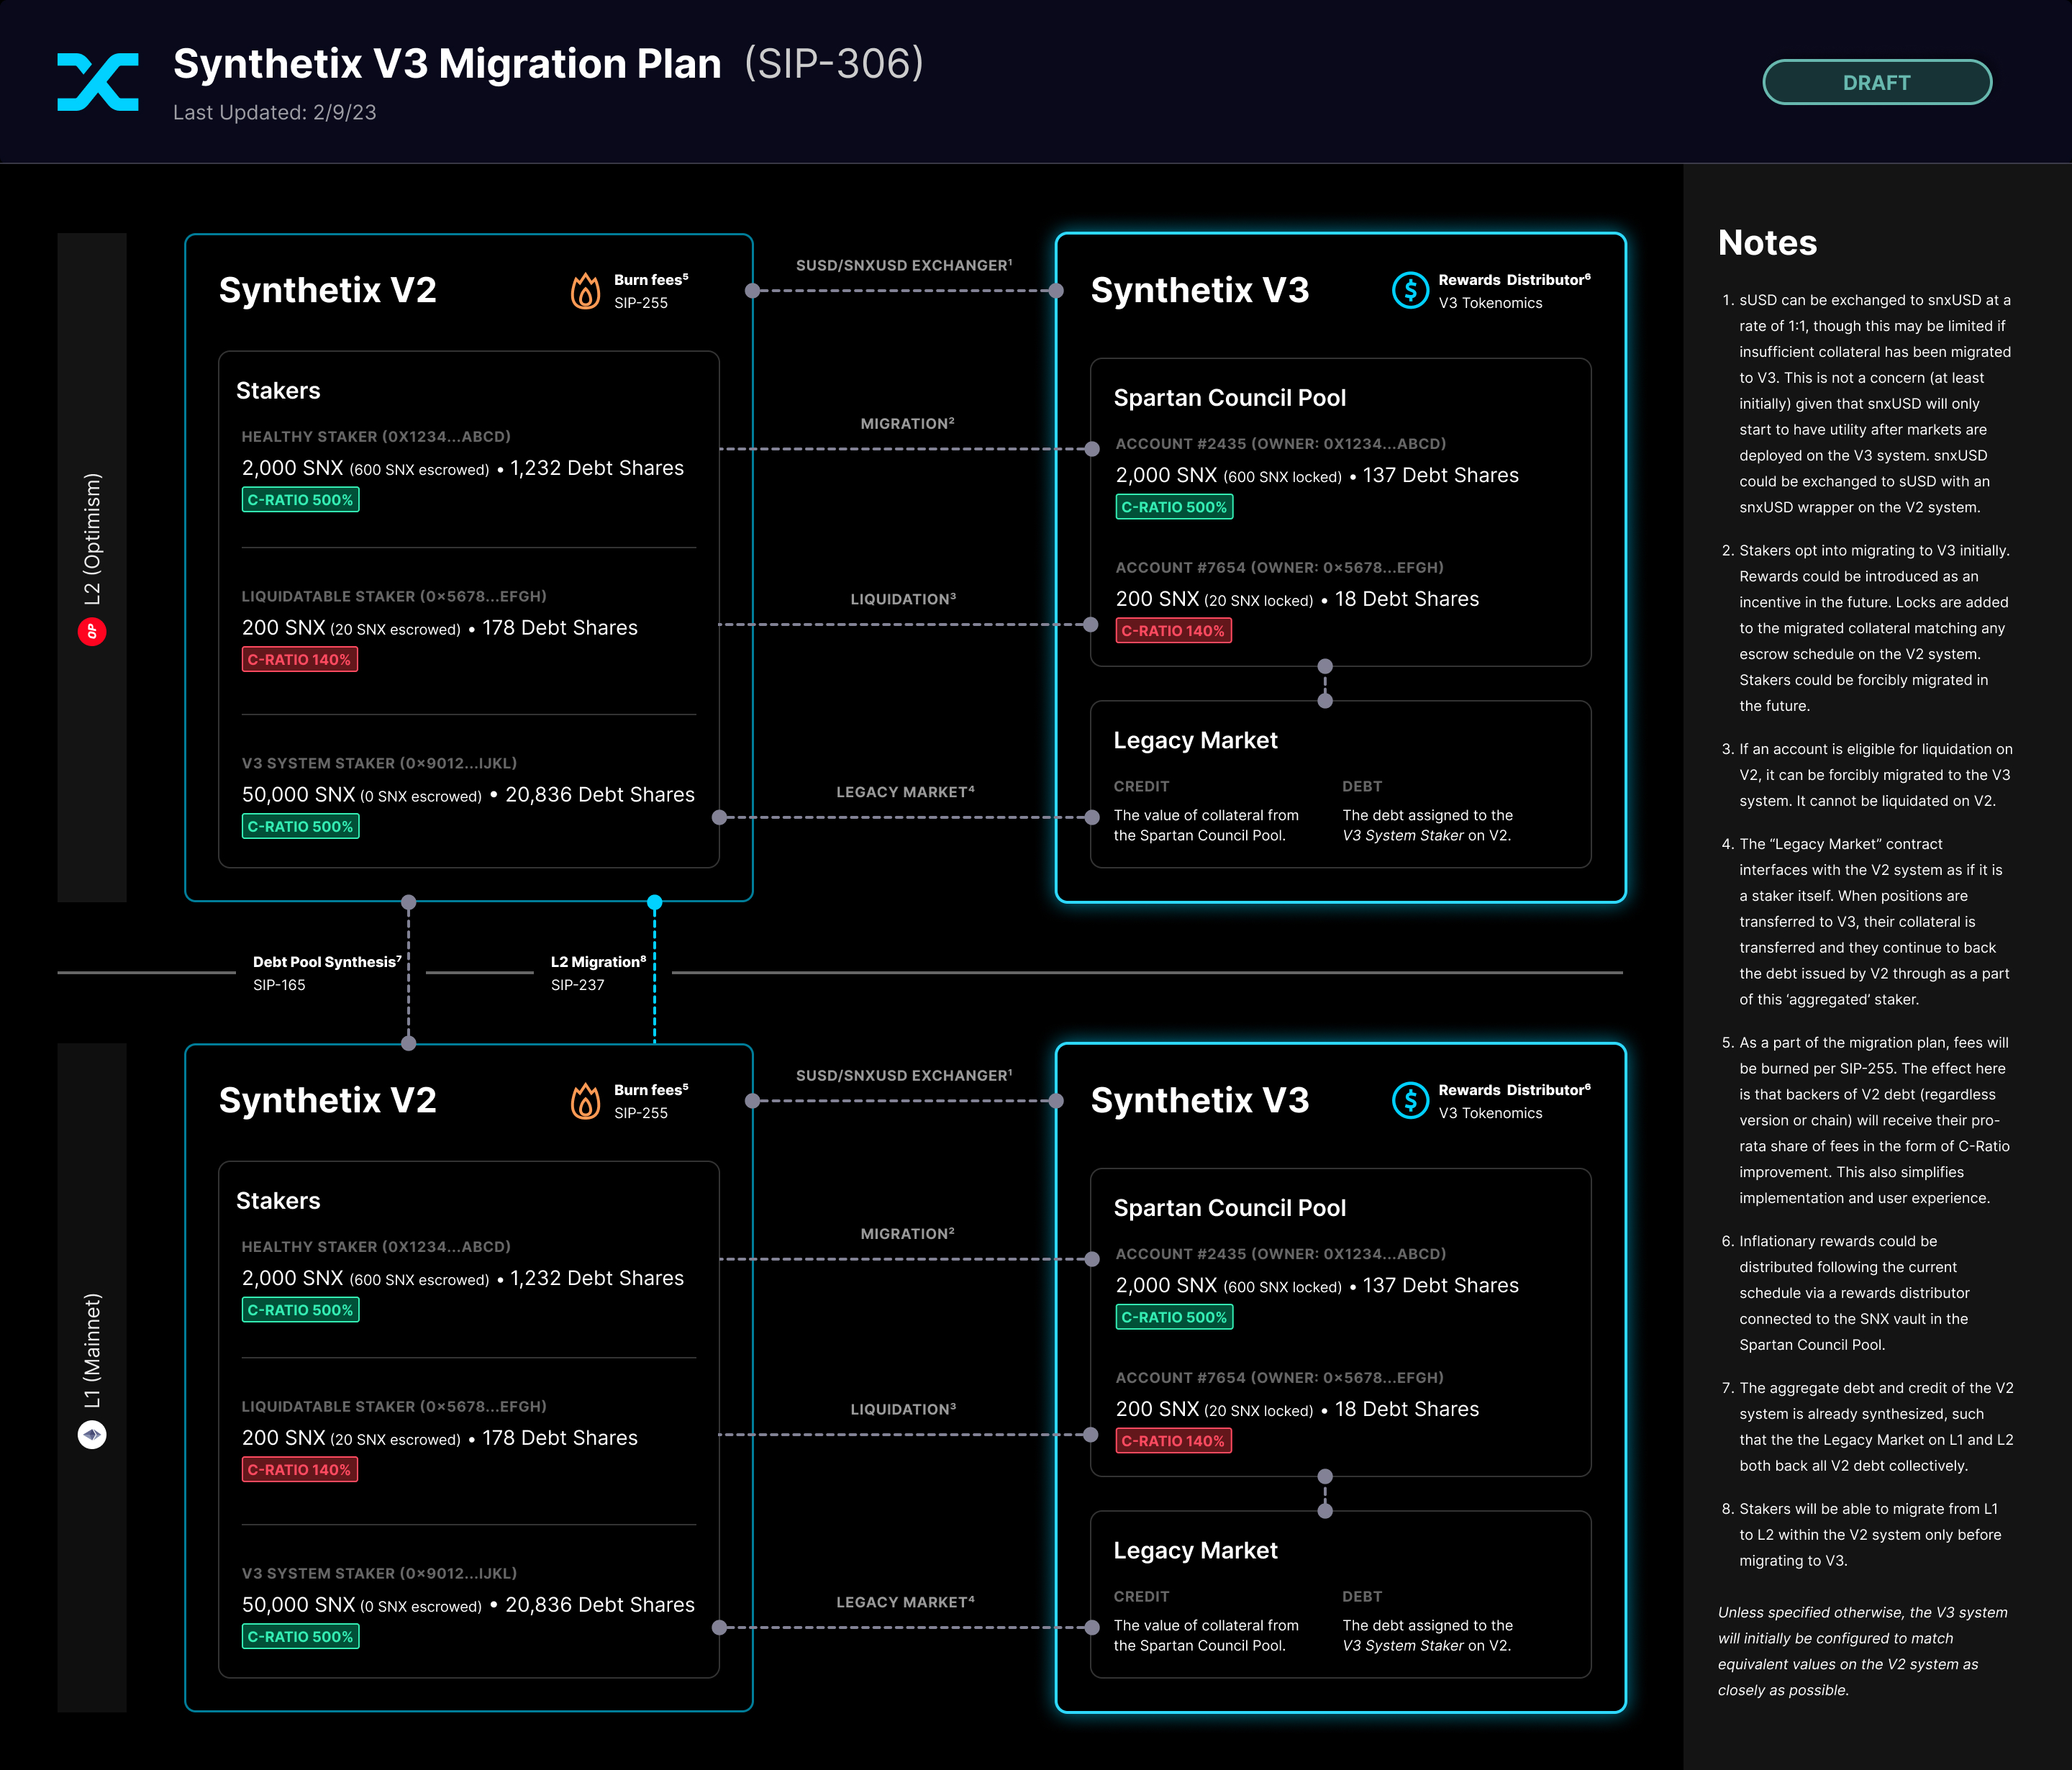 Synthetix V3 Migration Plan Overview